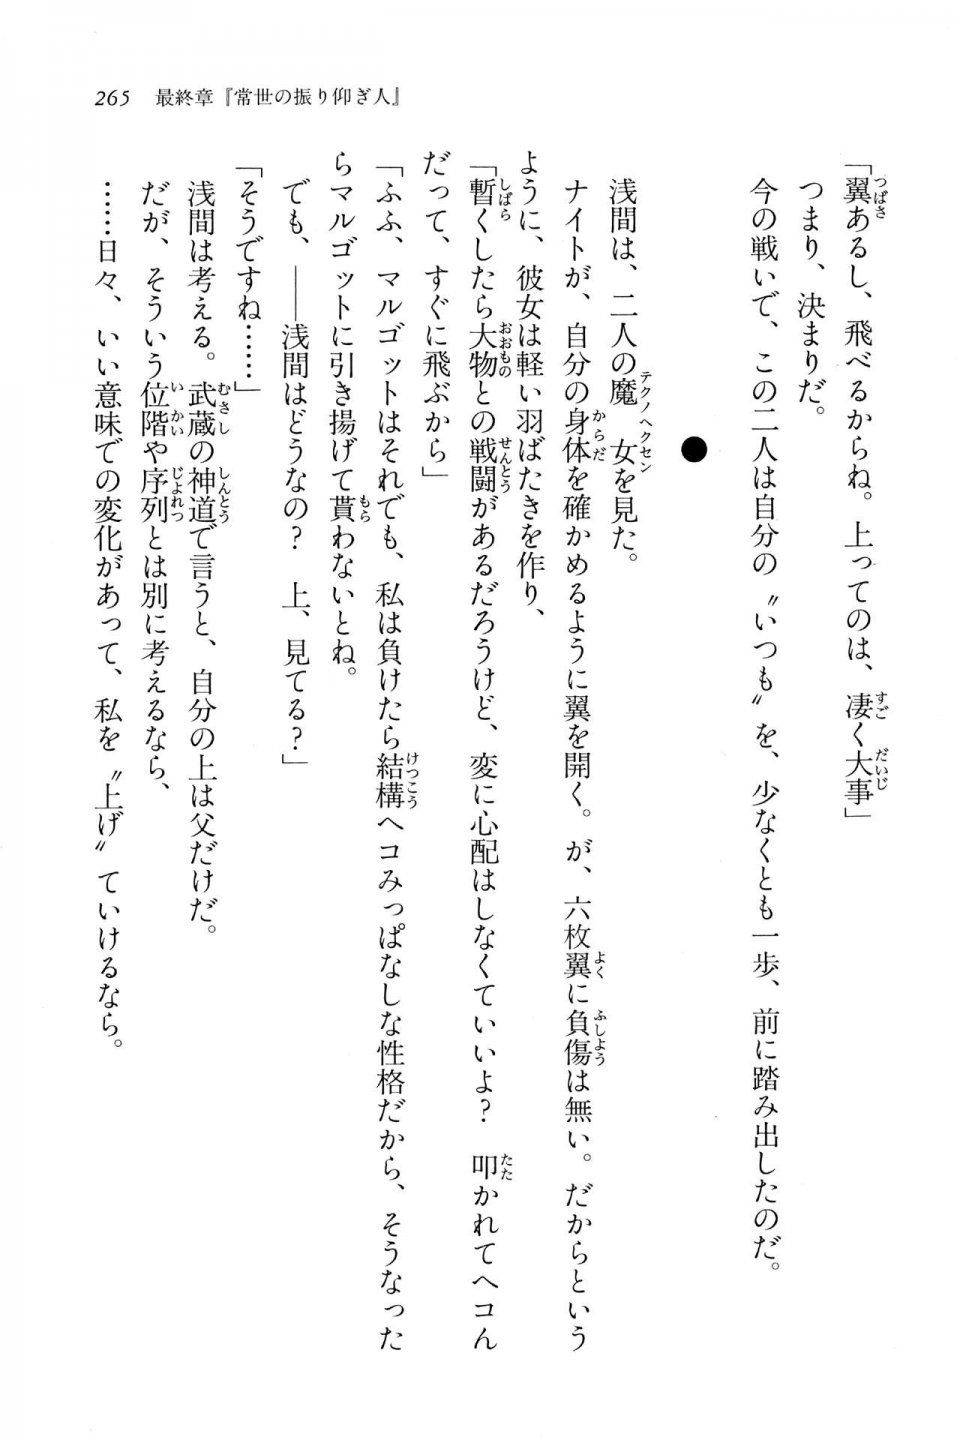 Kyoukai Senjou no Horizon BD Special Mininovel Vol 6(3B) - Photo #269